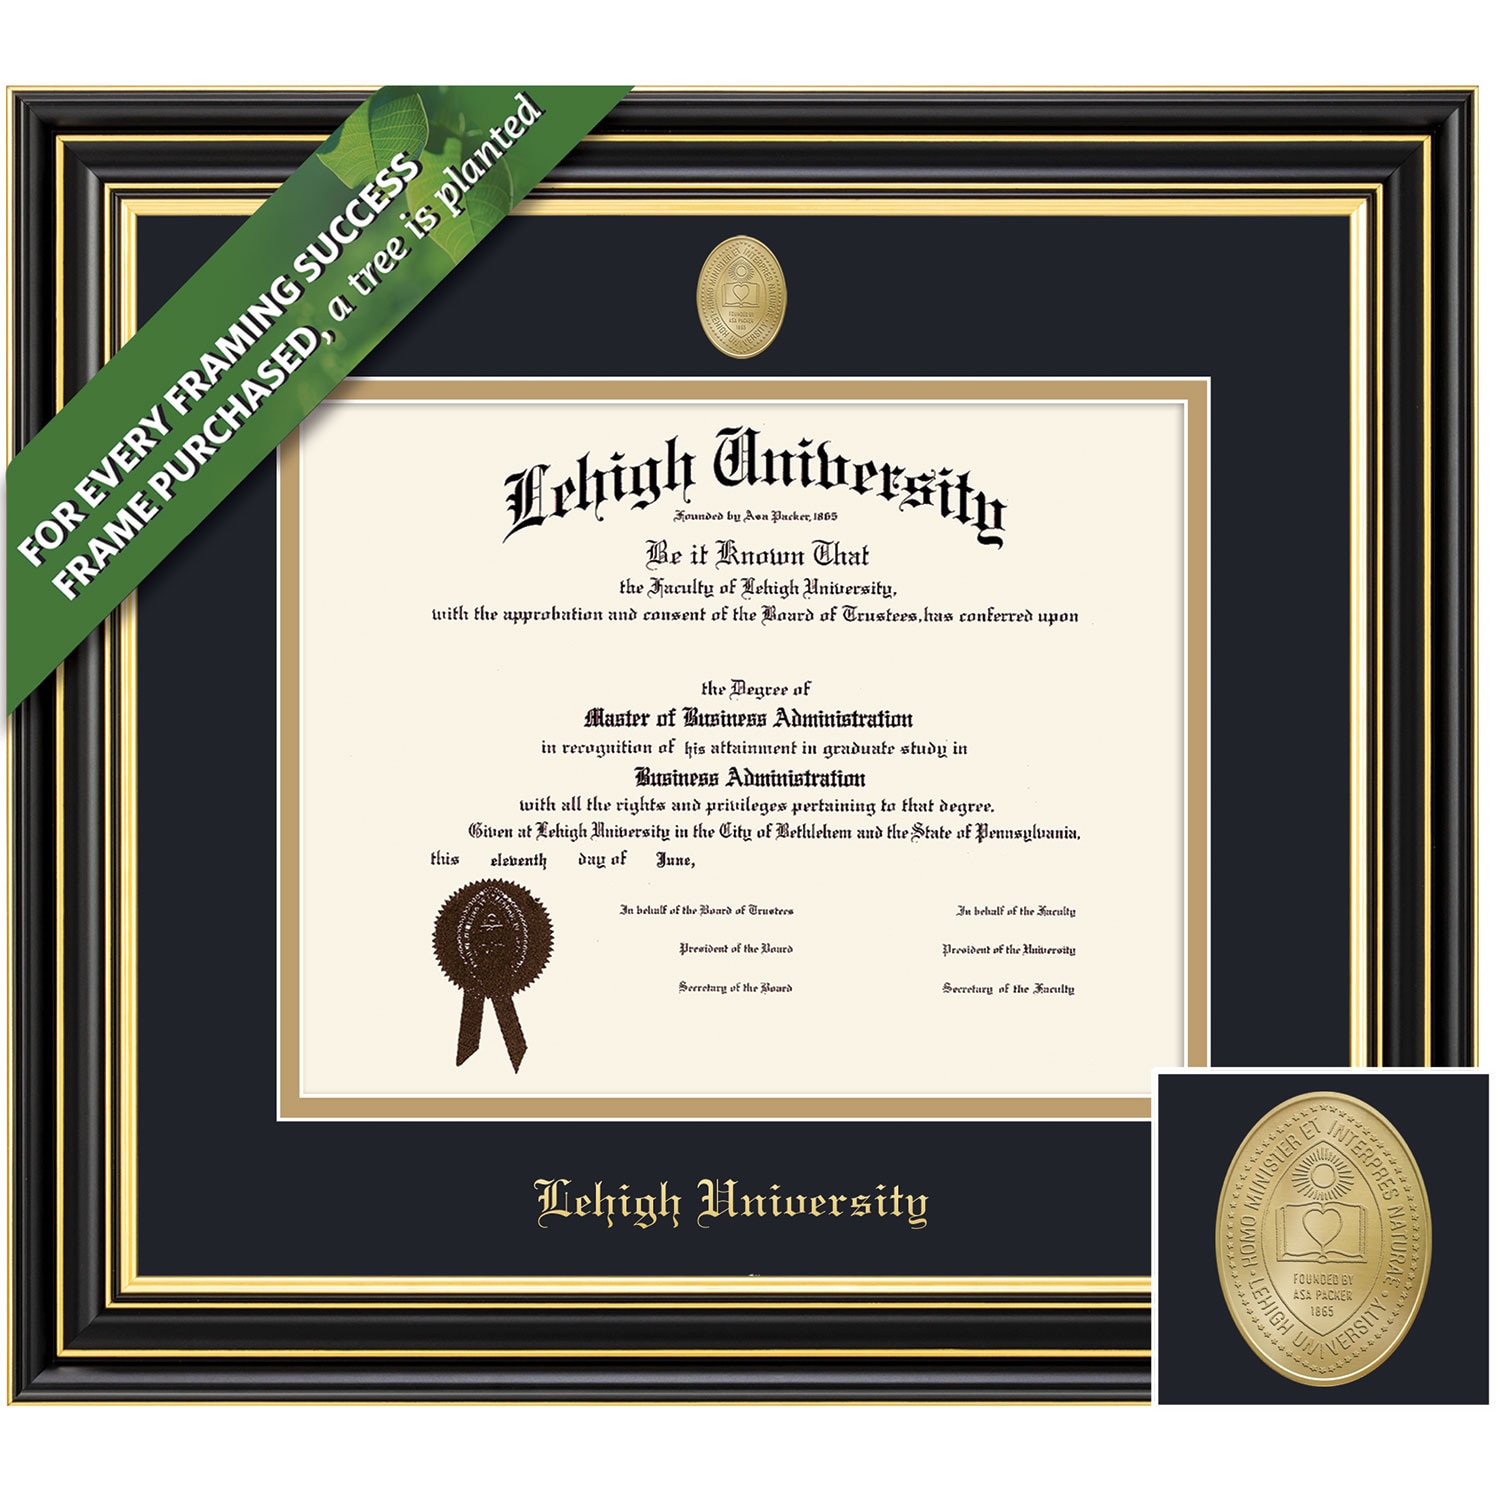 Framing Success 14 x 17 Prestige Gold Medallion Bachelors, Masters Diploma Frame